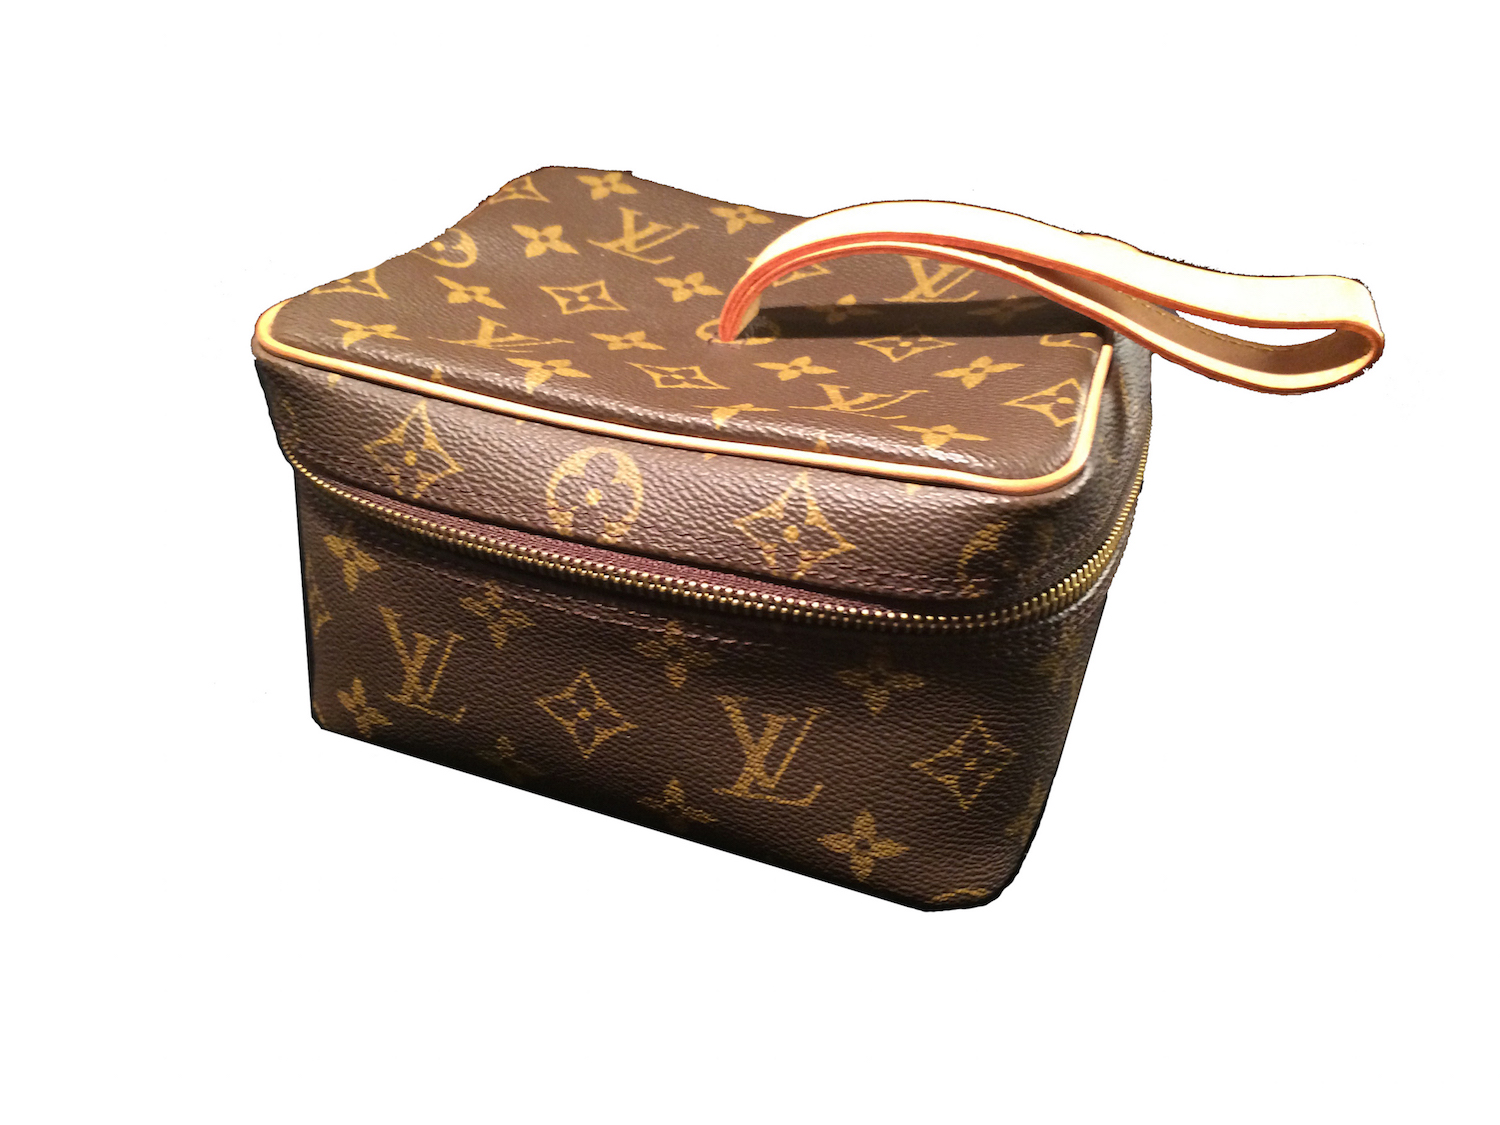 Luxury Handbag - LOUIS VUITTON SQUARE